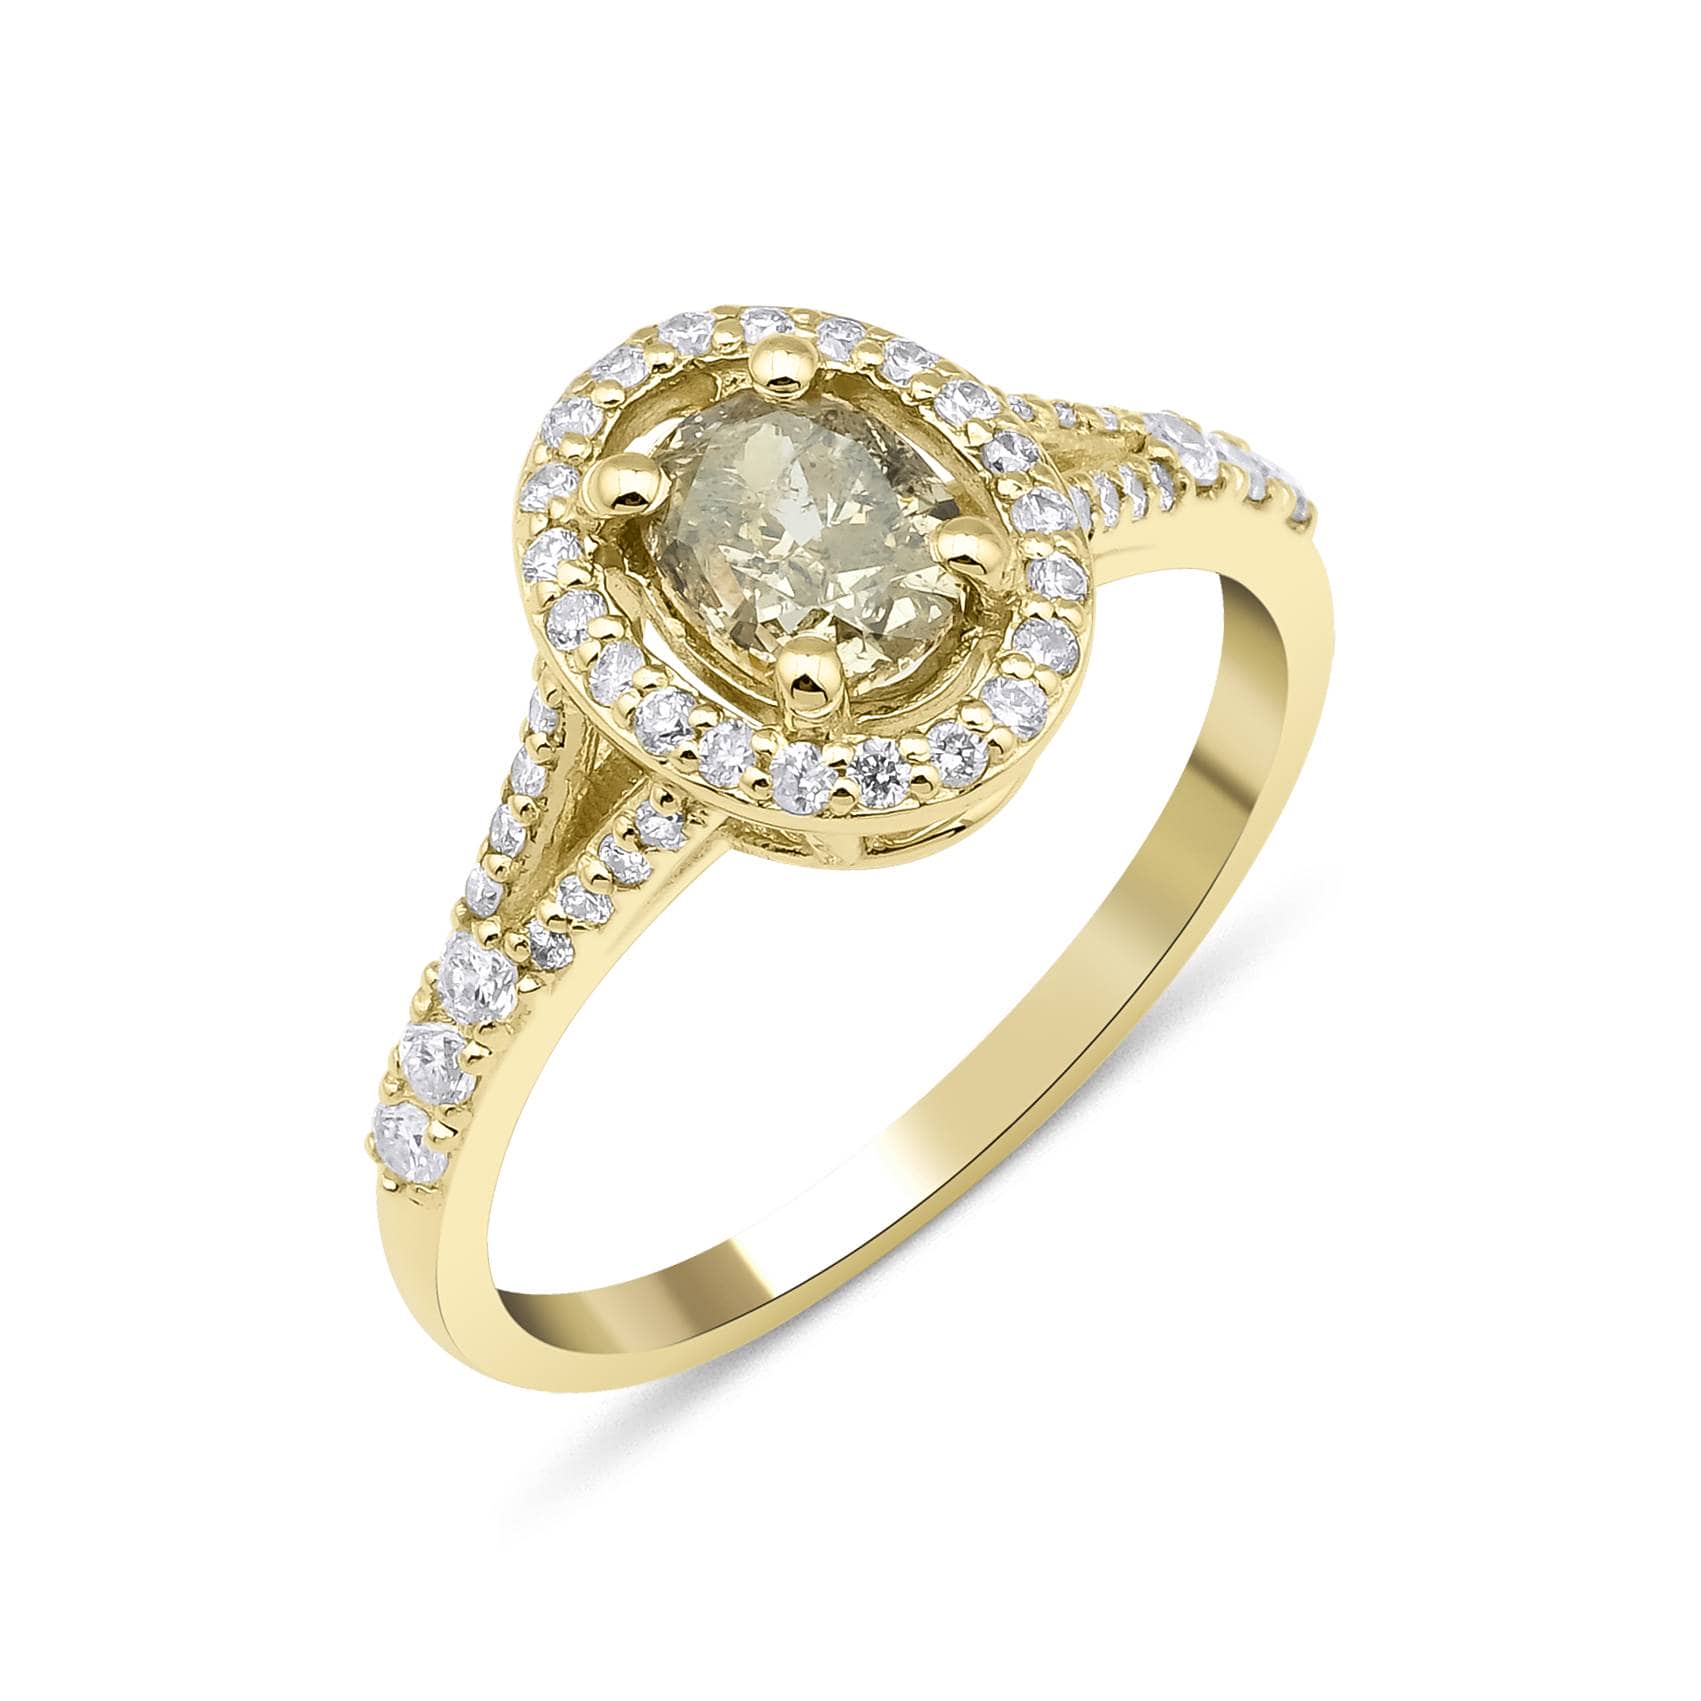 Greenish Fancy Yellow Diamond 1.08ct Ring